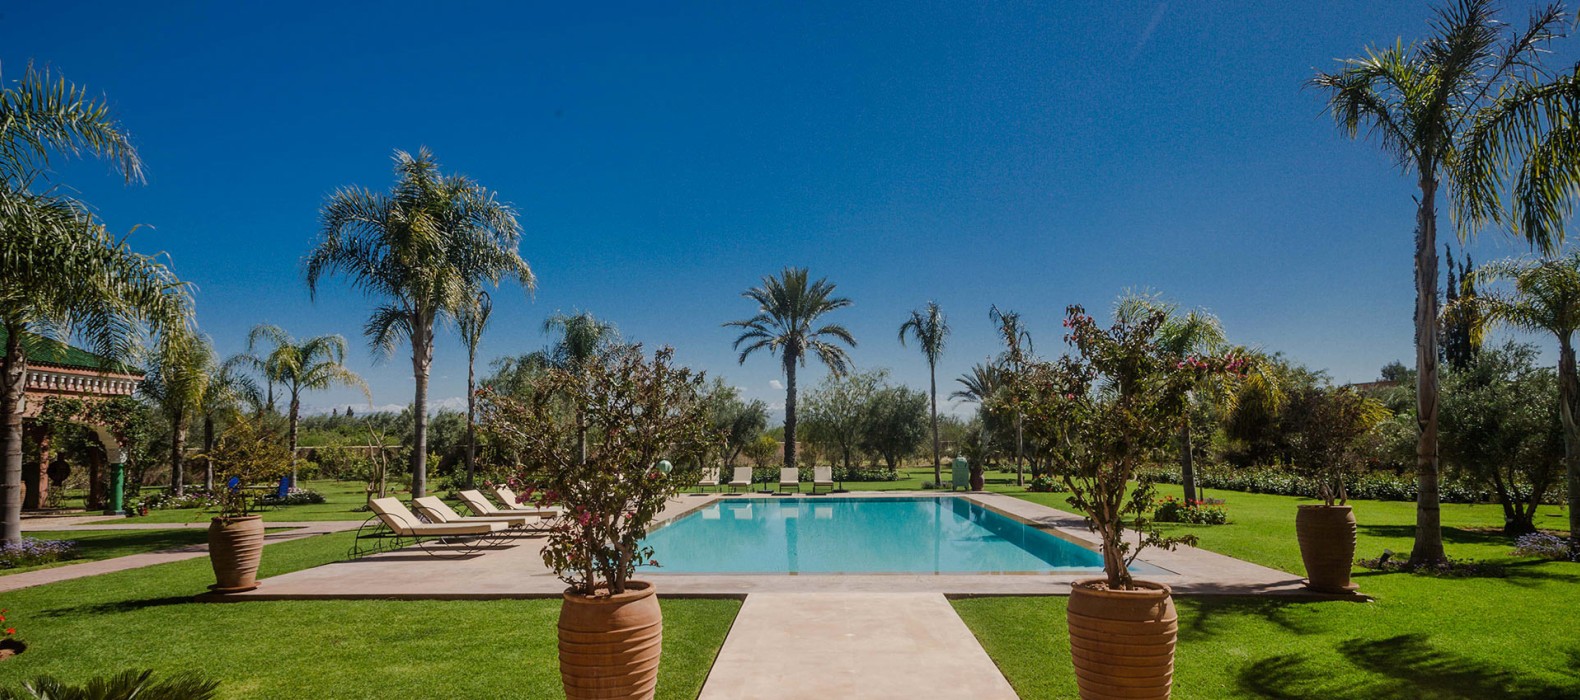 Exterior pool area view of Villa Rosalie in Marrakech